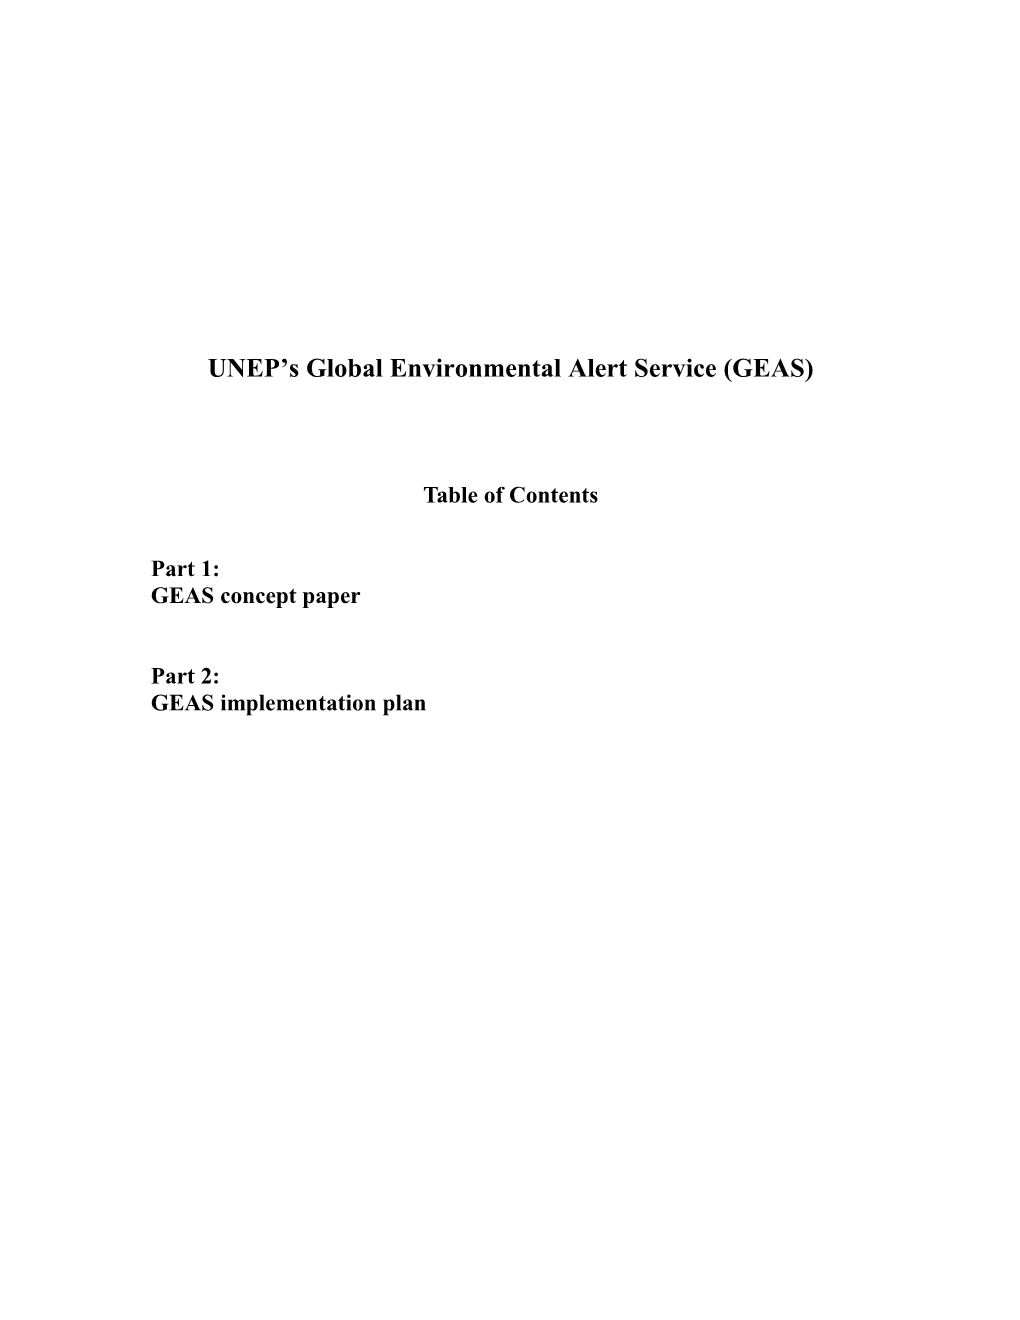 UNEP S Global Environmental Alert Service (GEAS)